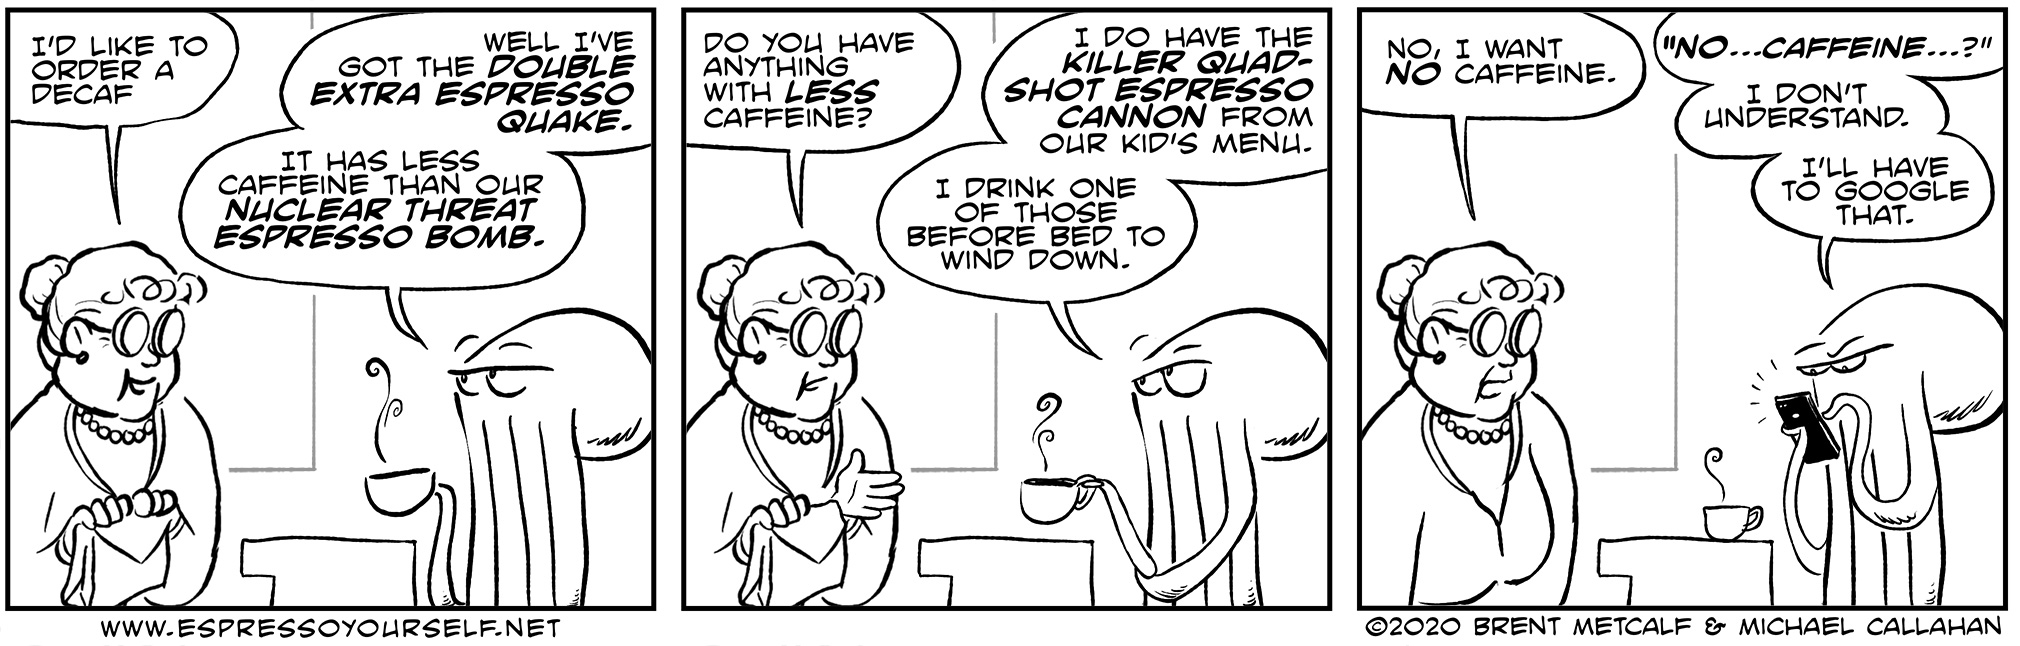 Caffeination Confusion